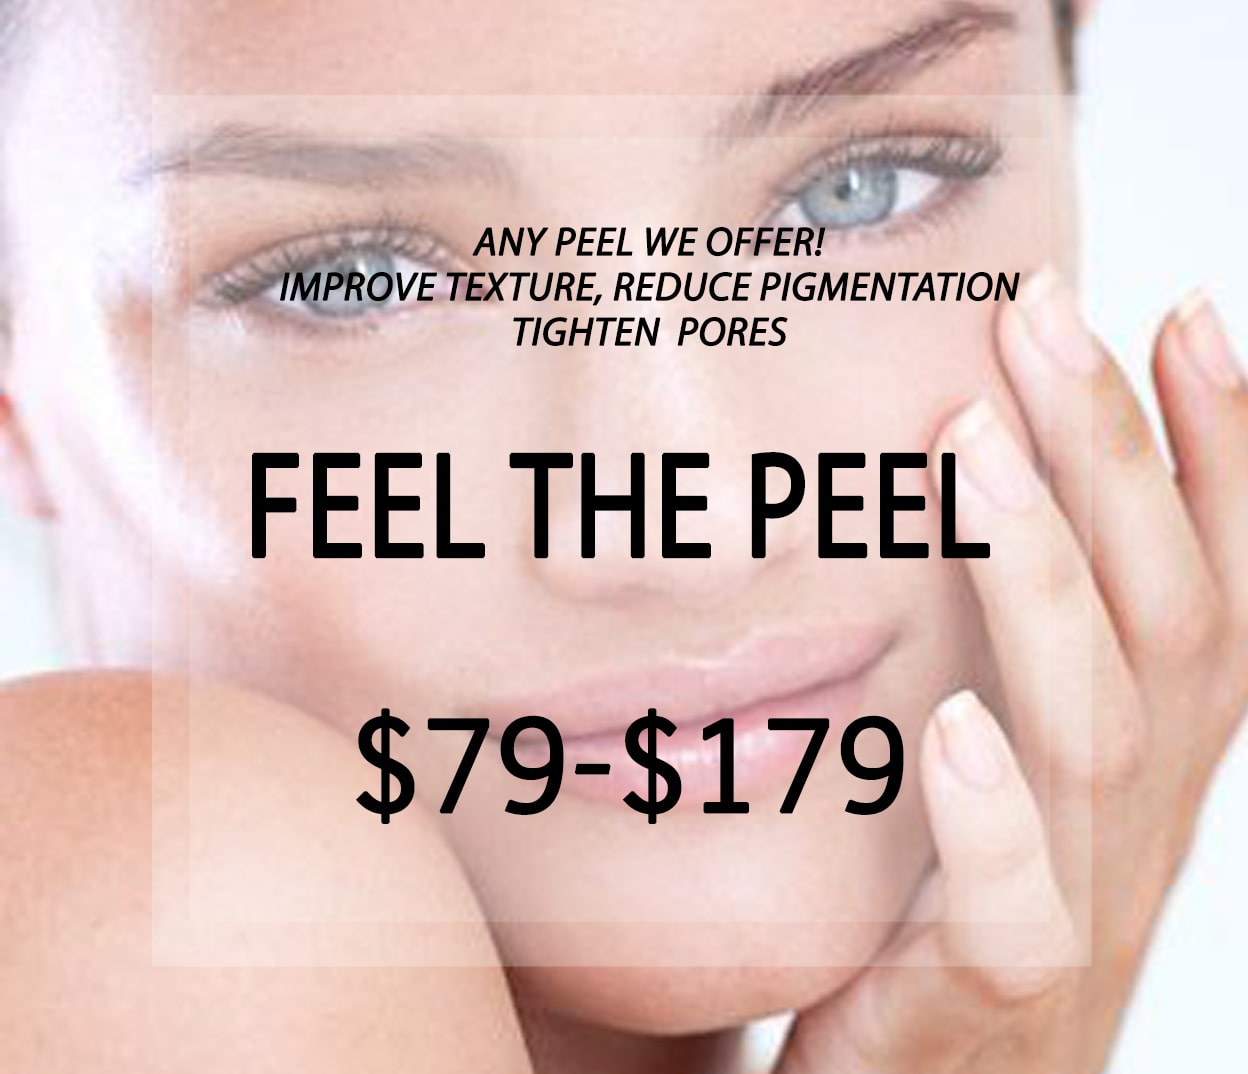 Chemical Peels | Feel the Peel Offer | Beauty Lab + Laser in Murray & Riverton, UT